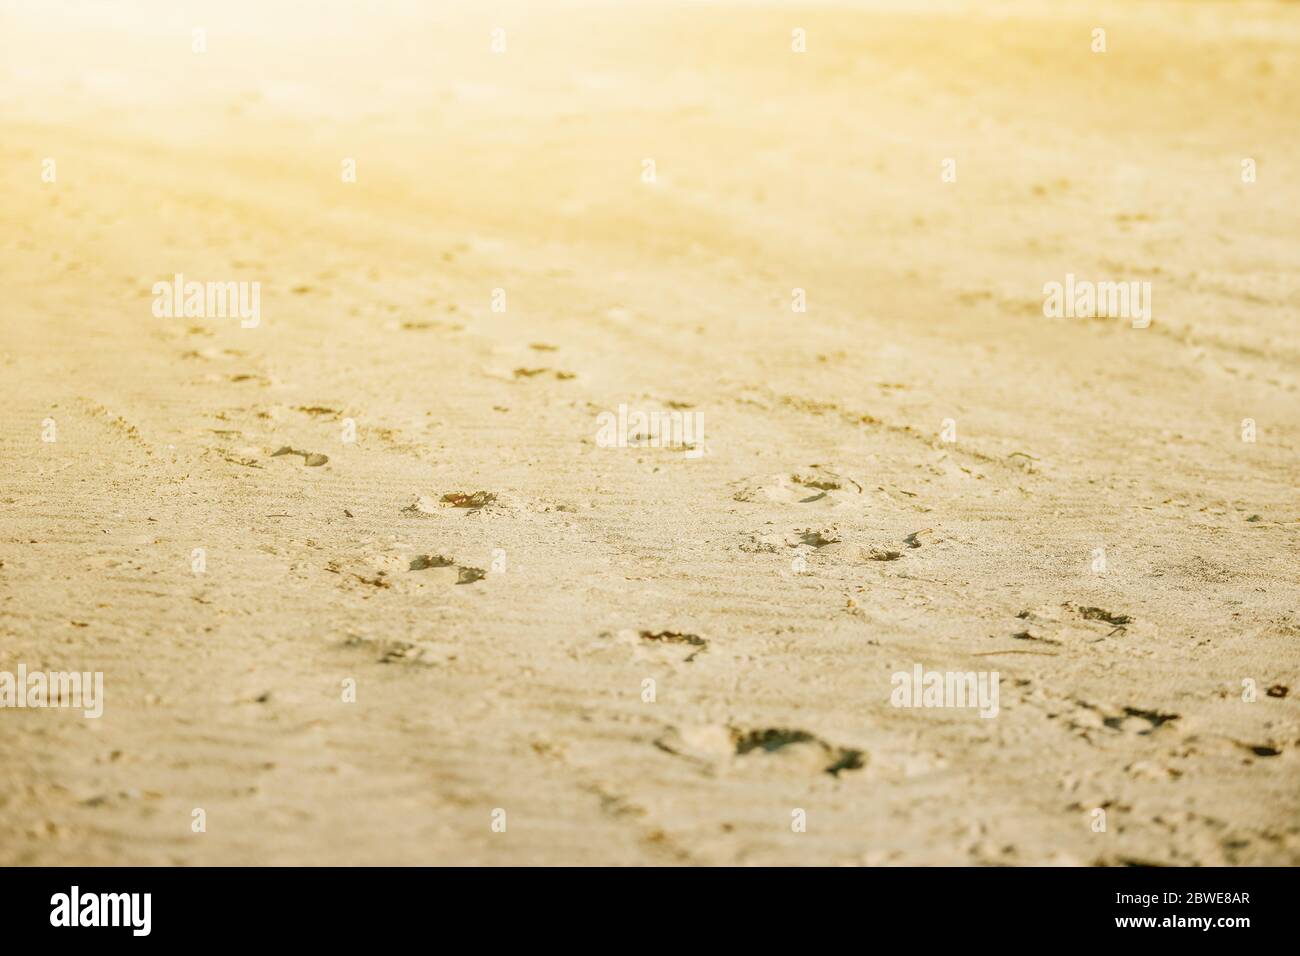 Sand dunes in the desert. Global warming Stock Photo